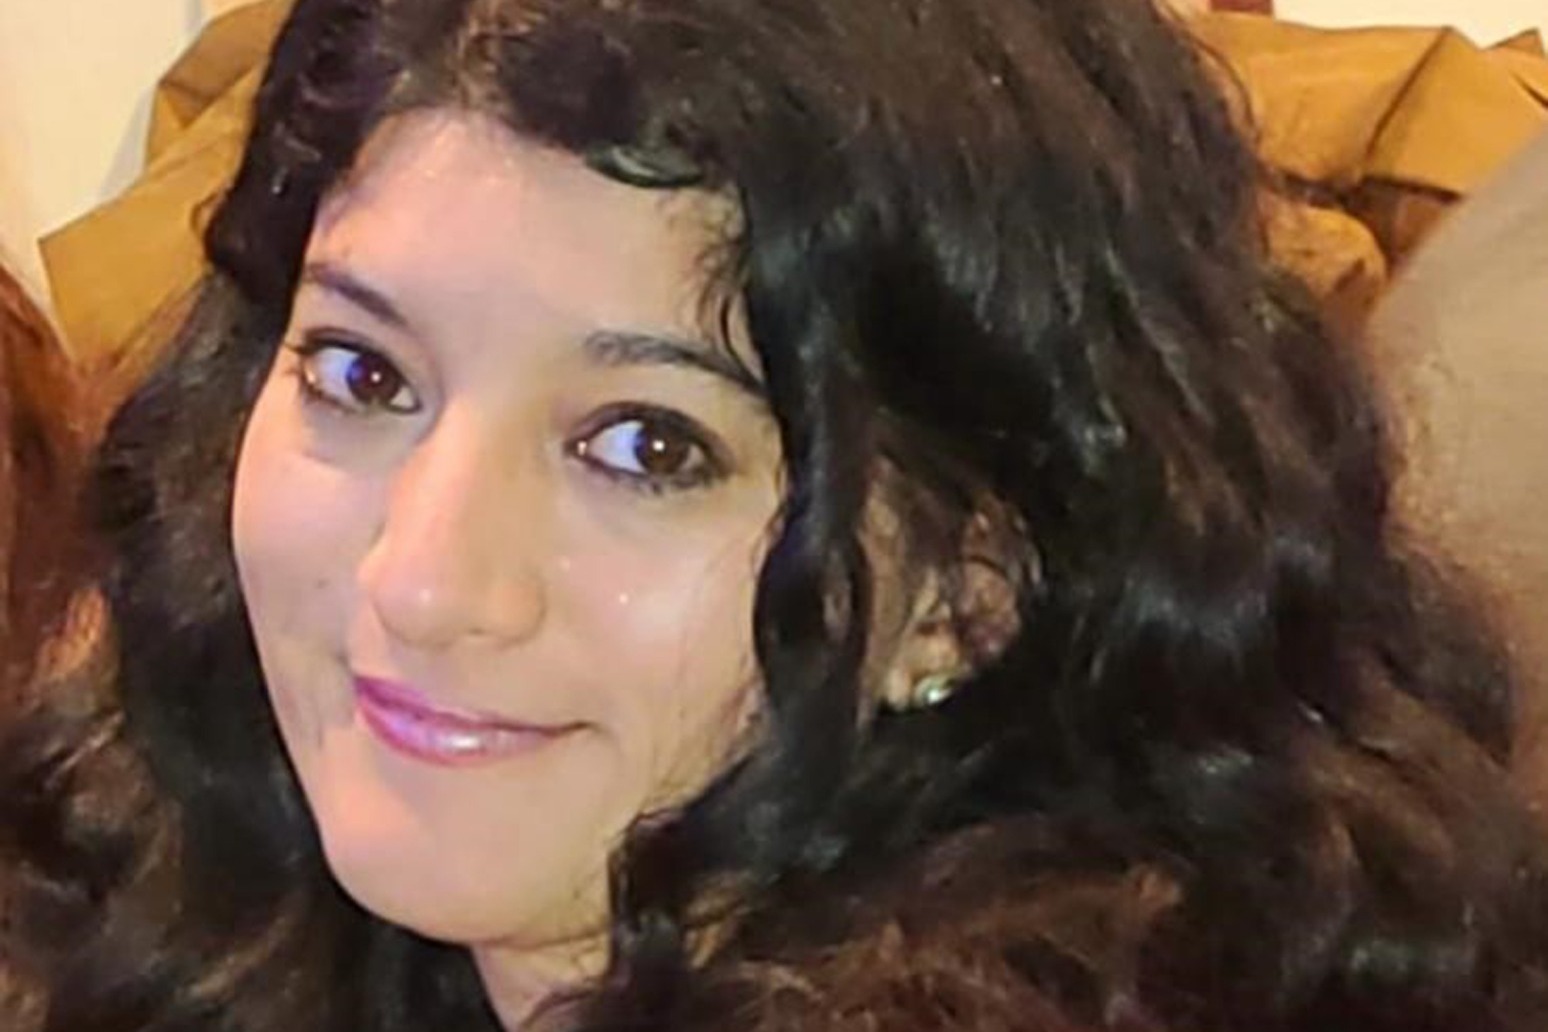 Sexual predator admits murder of law graduate Zara Aleena 